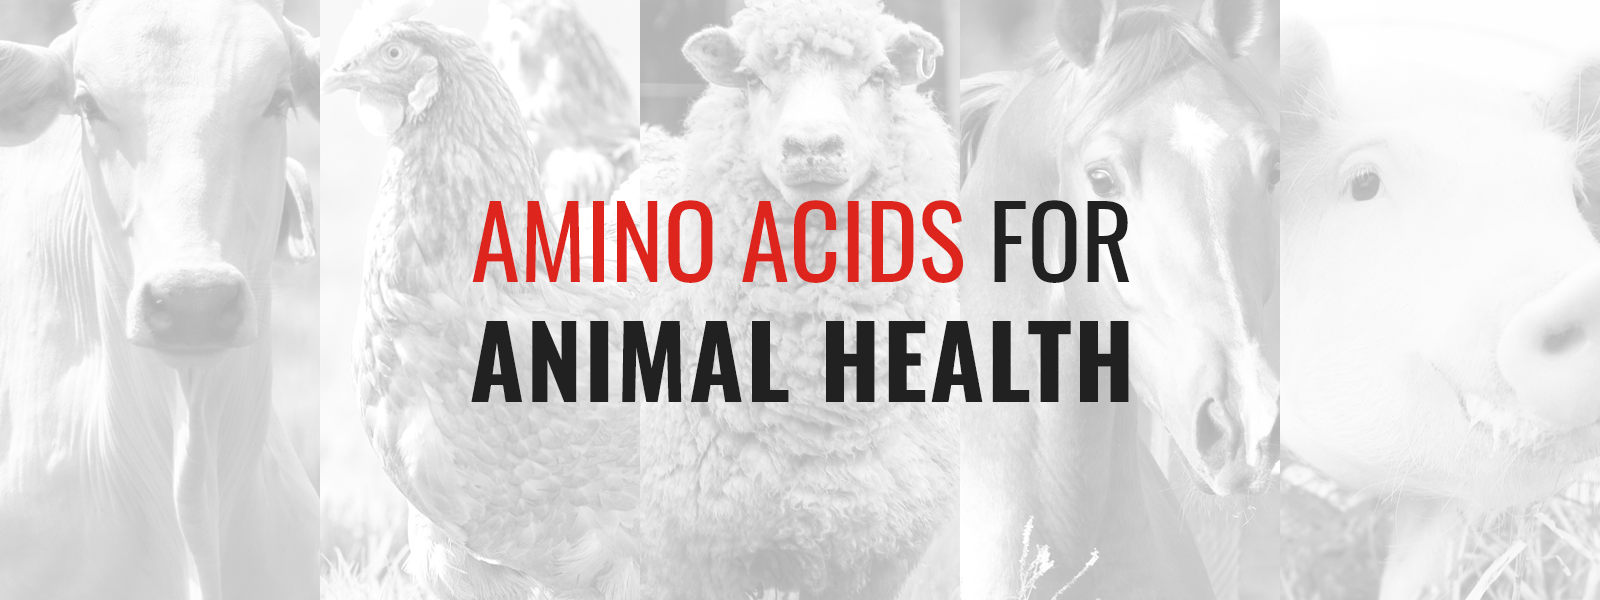 01 - Amino Acids for Animal Health